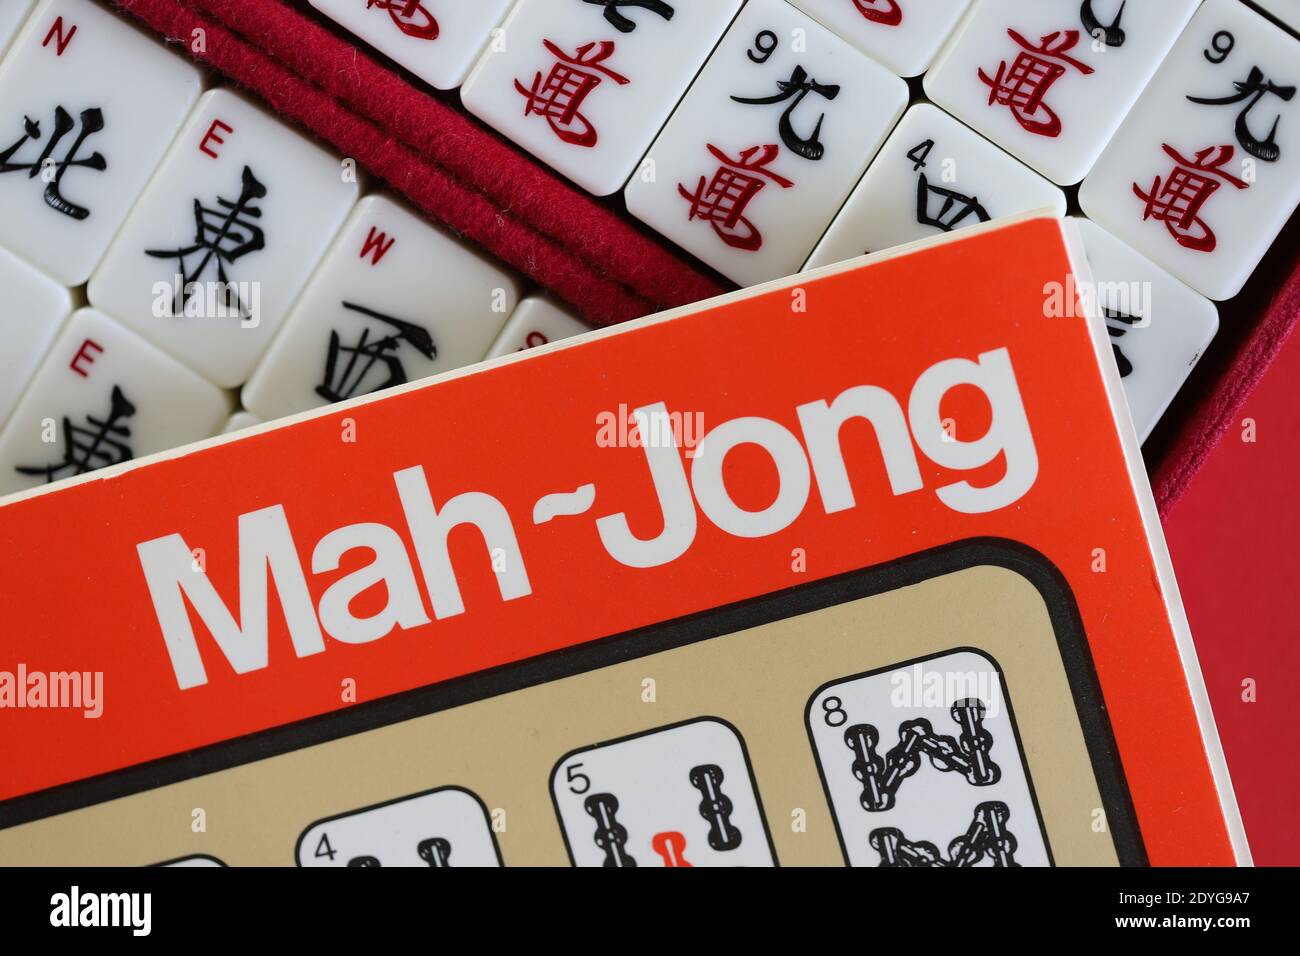 Ipswich, UK - 26. Dezember 2020: MAh Jong Spielsteine und Regelwerk. Stockfoto